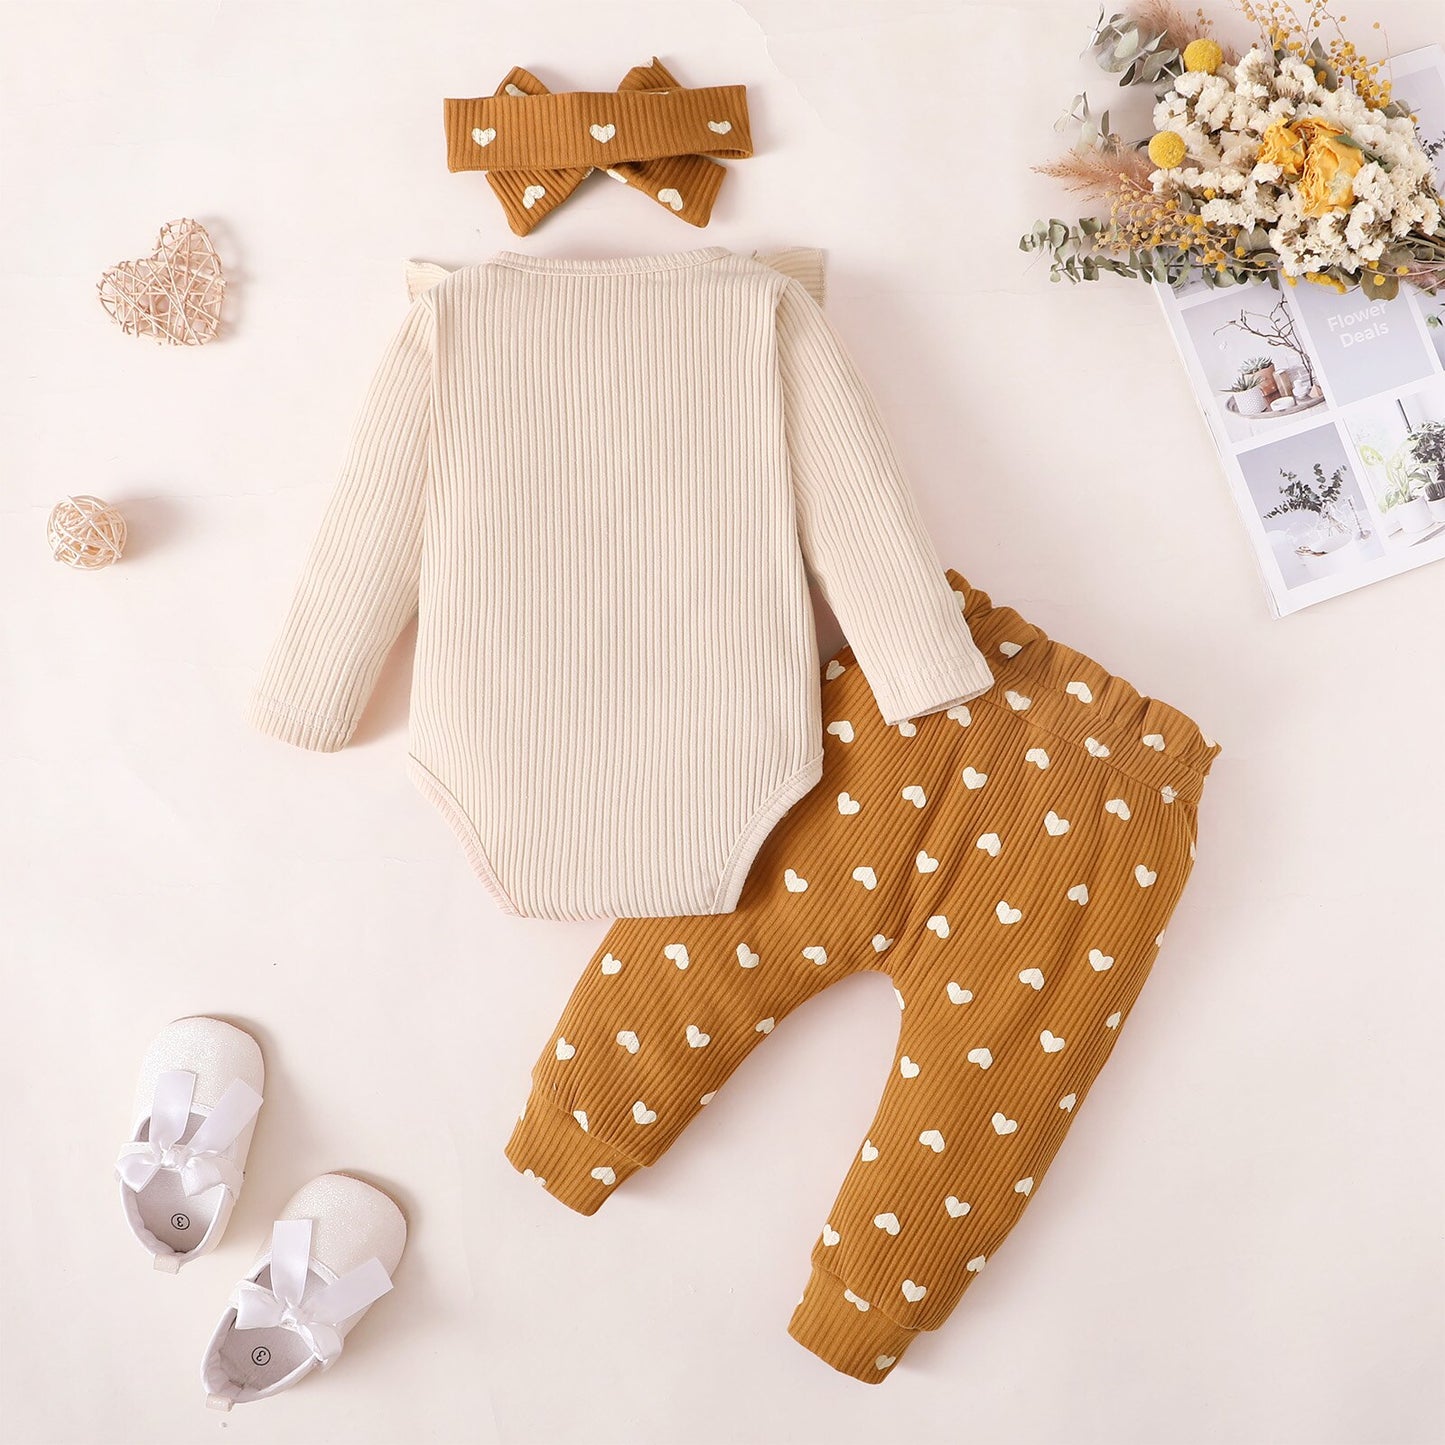 Autumn 3pcs Toddler Newborn Baby Girl Clothes Set Long Sleeve Knitting Top Bodysuit Printed Love Heart Pants Headband Outfit